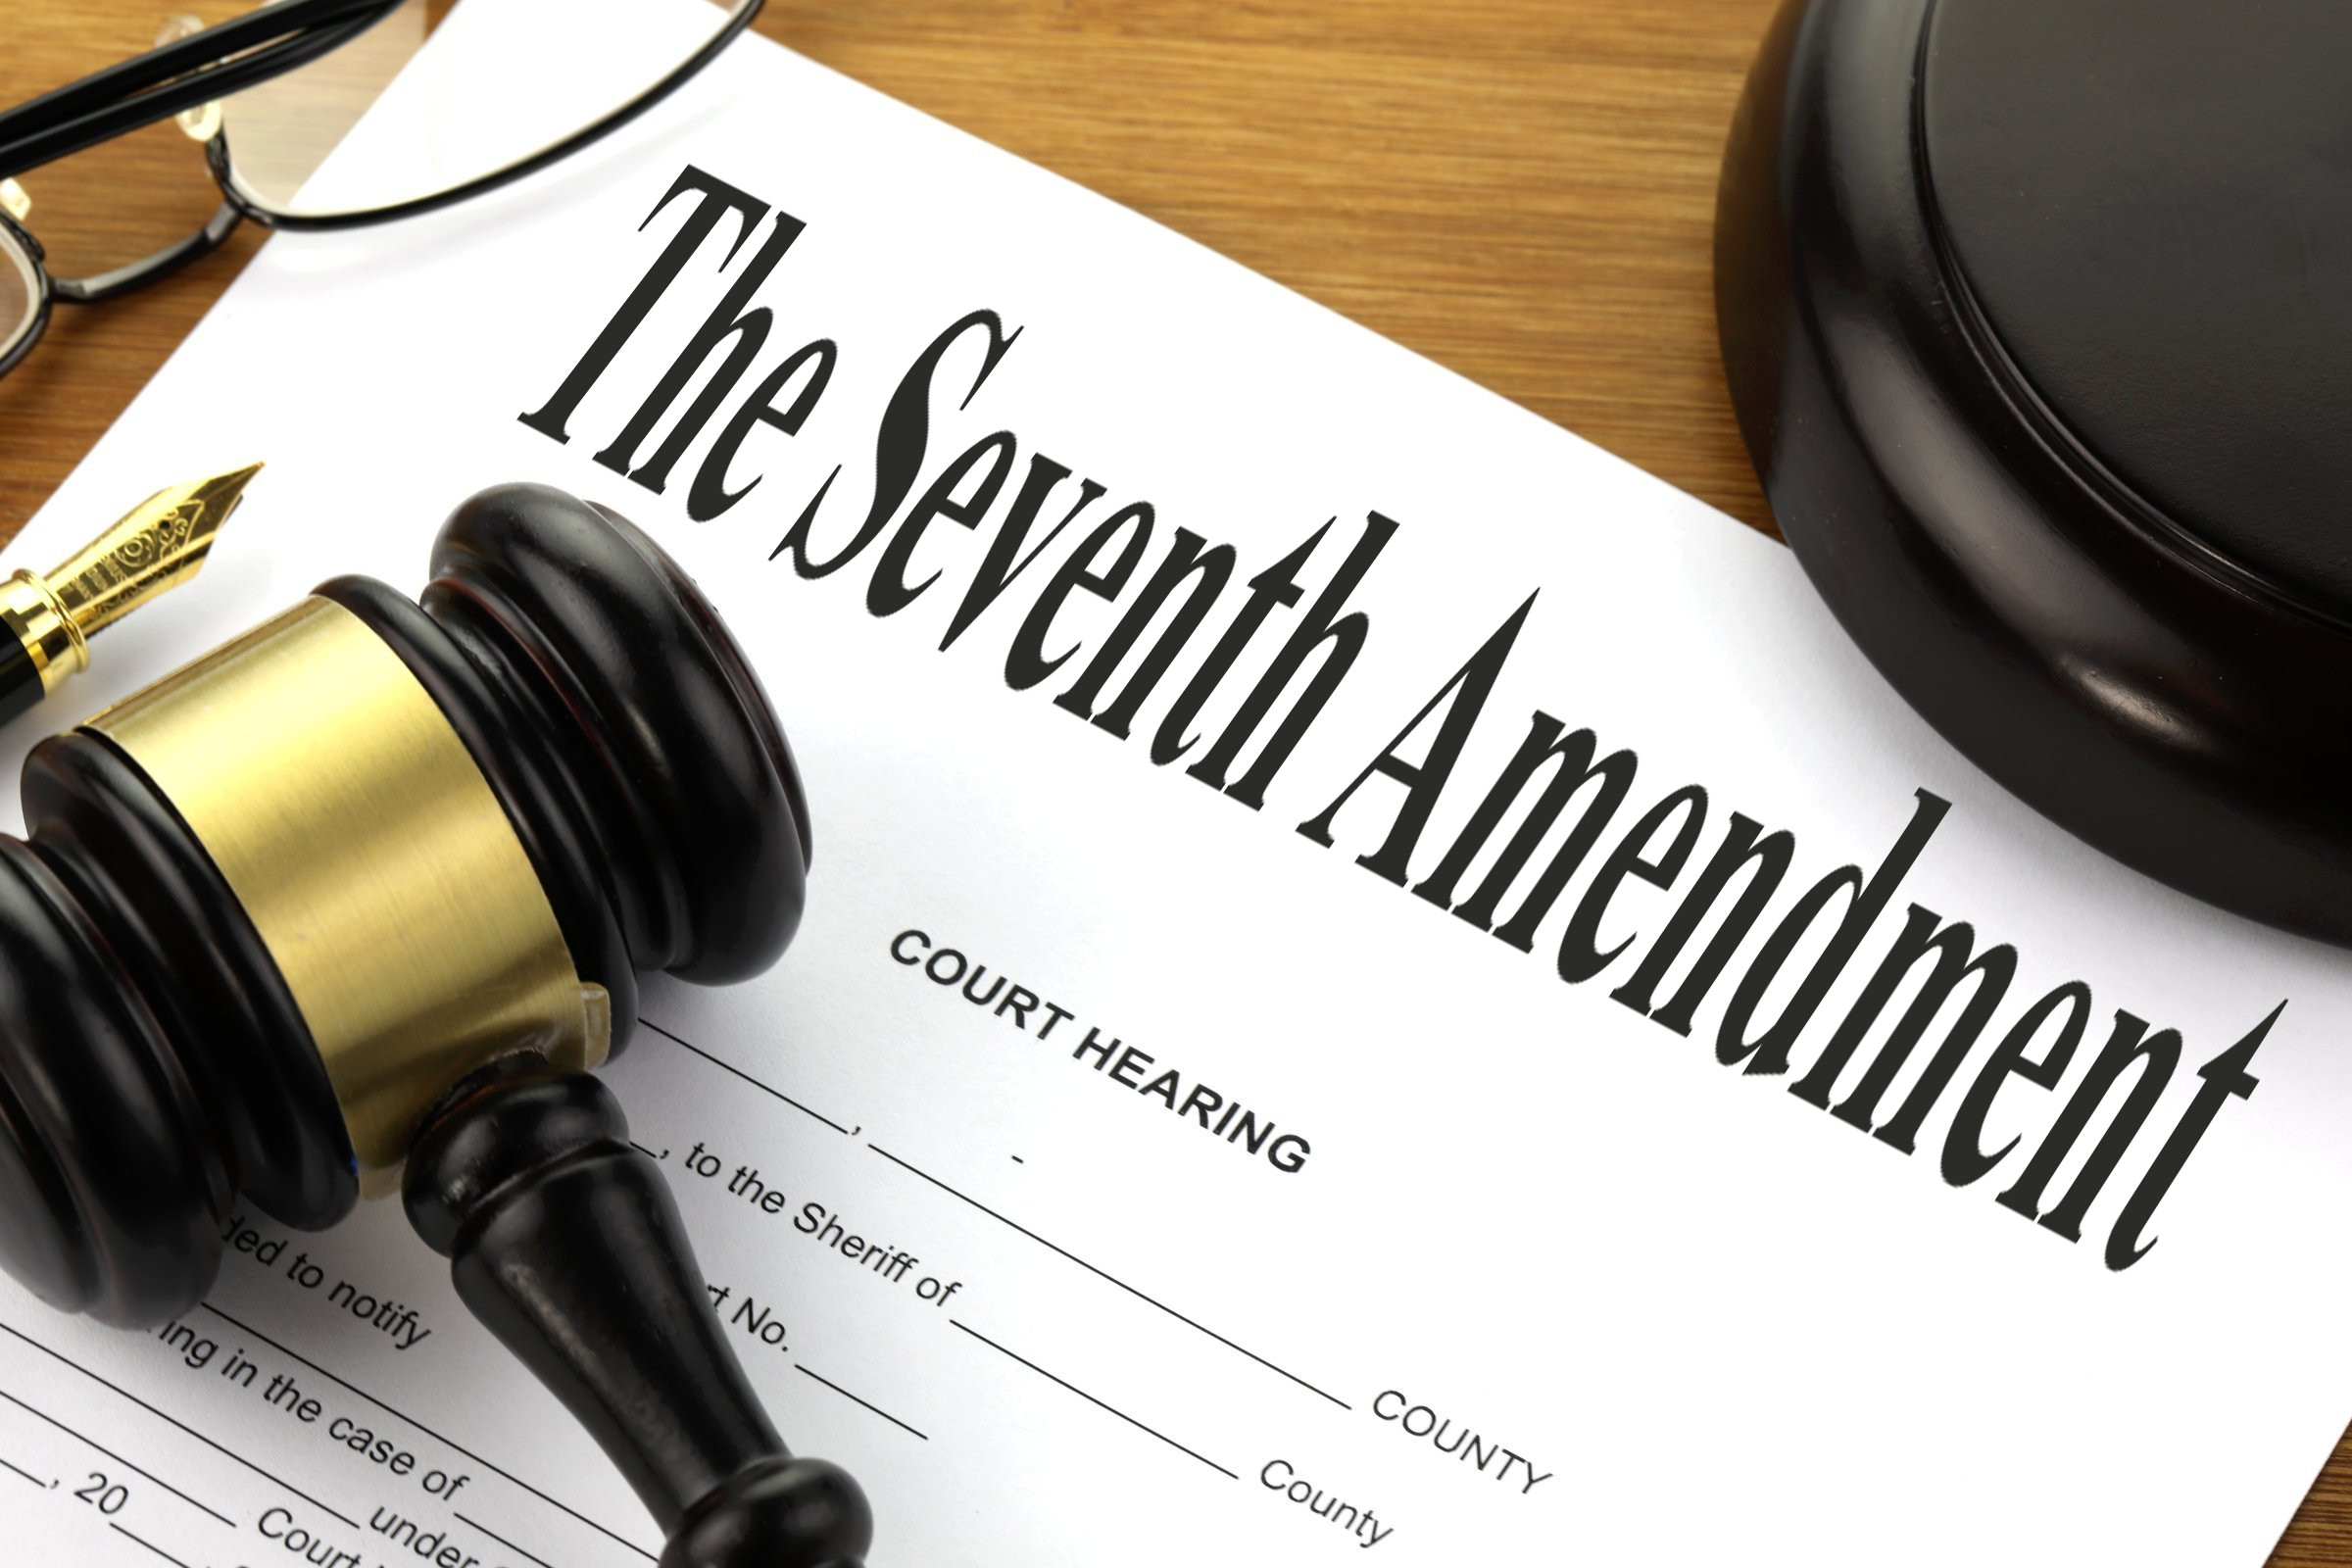 the seventh amendment